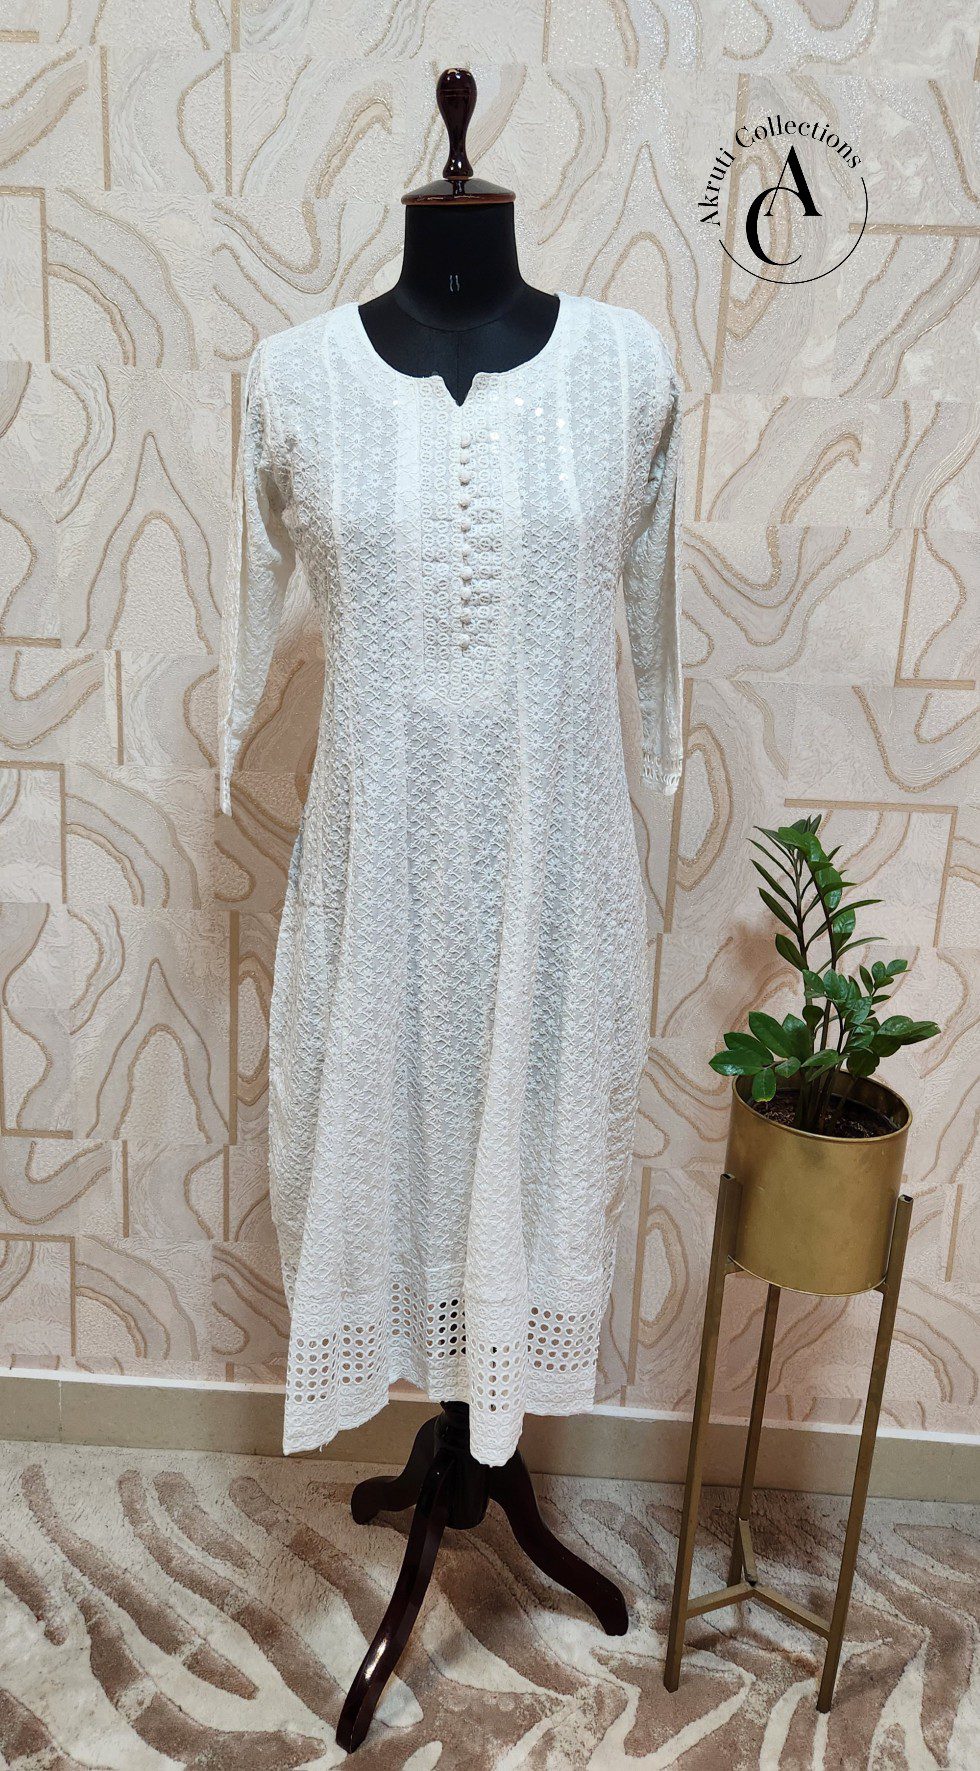 Women's Indian Ethnic Daily Wear Cotton White Top Wear Short Kurtis(Combo  of 3) | eBay